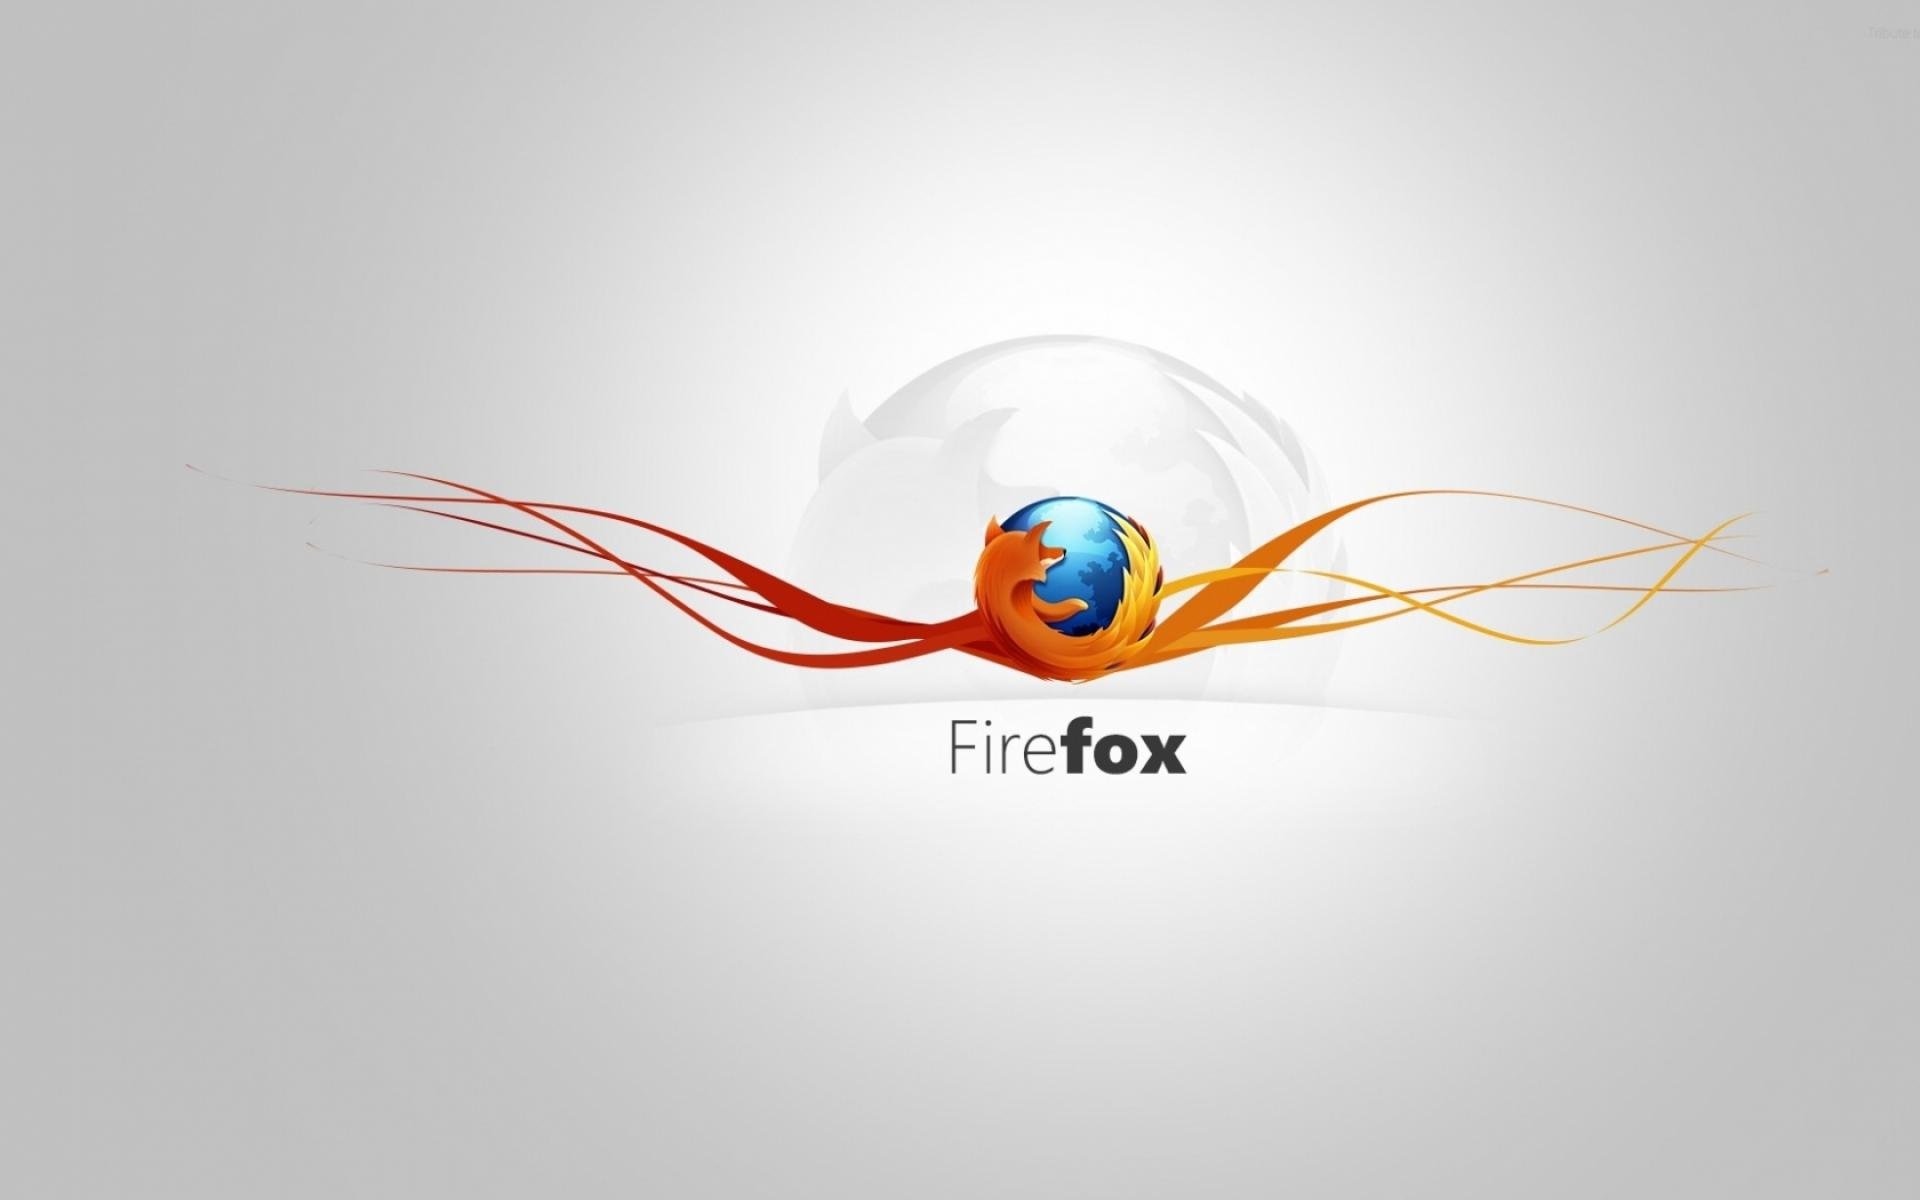 Mozilla Firefox browser без смс